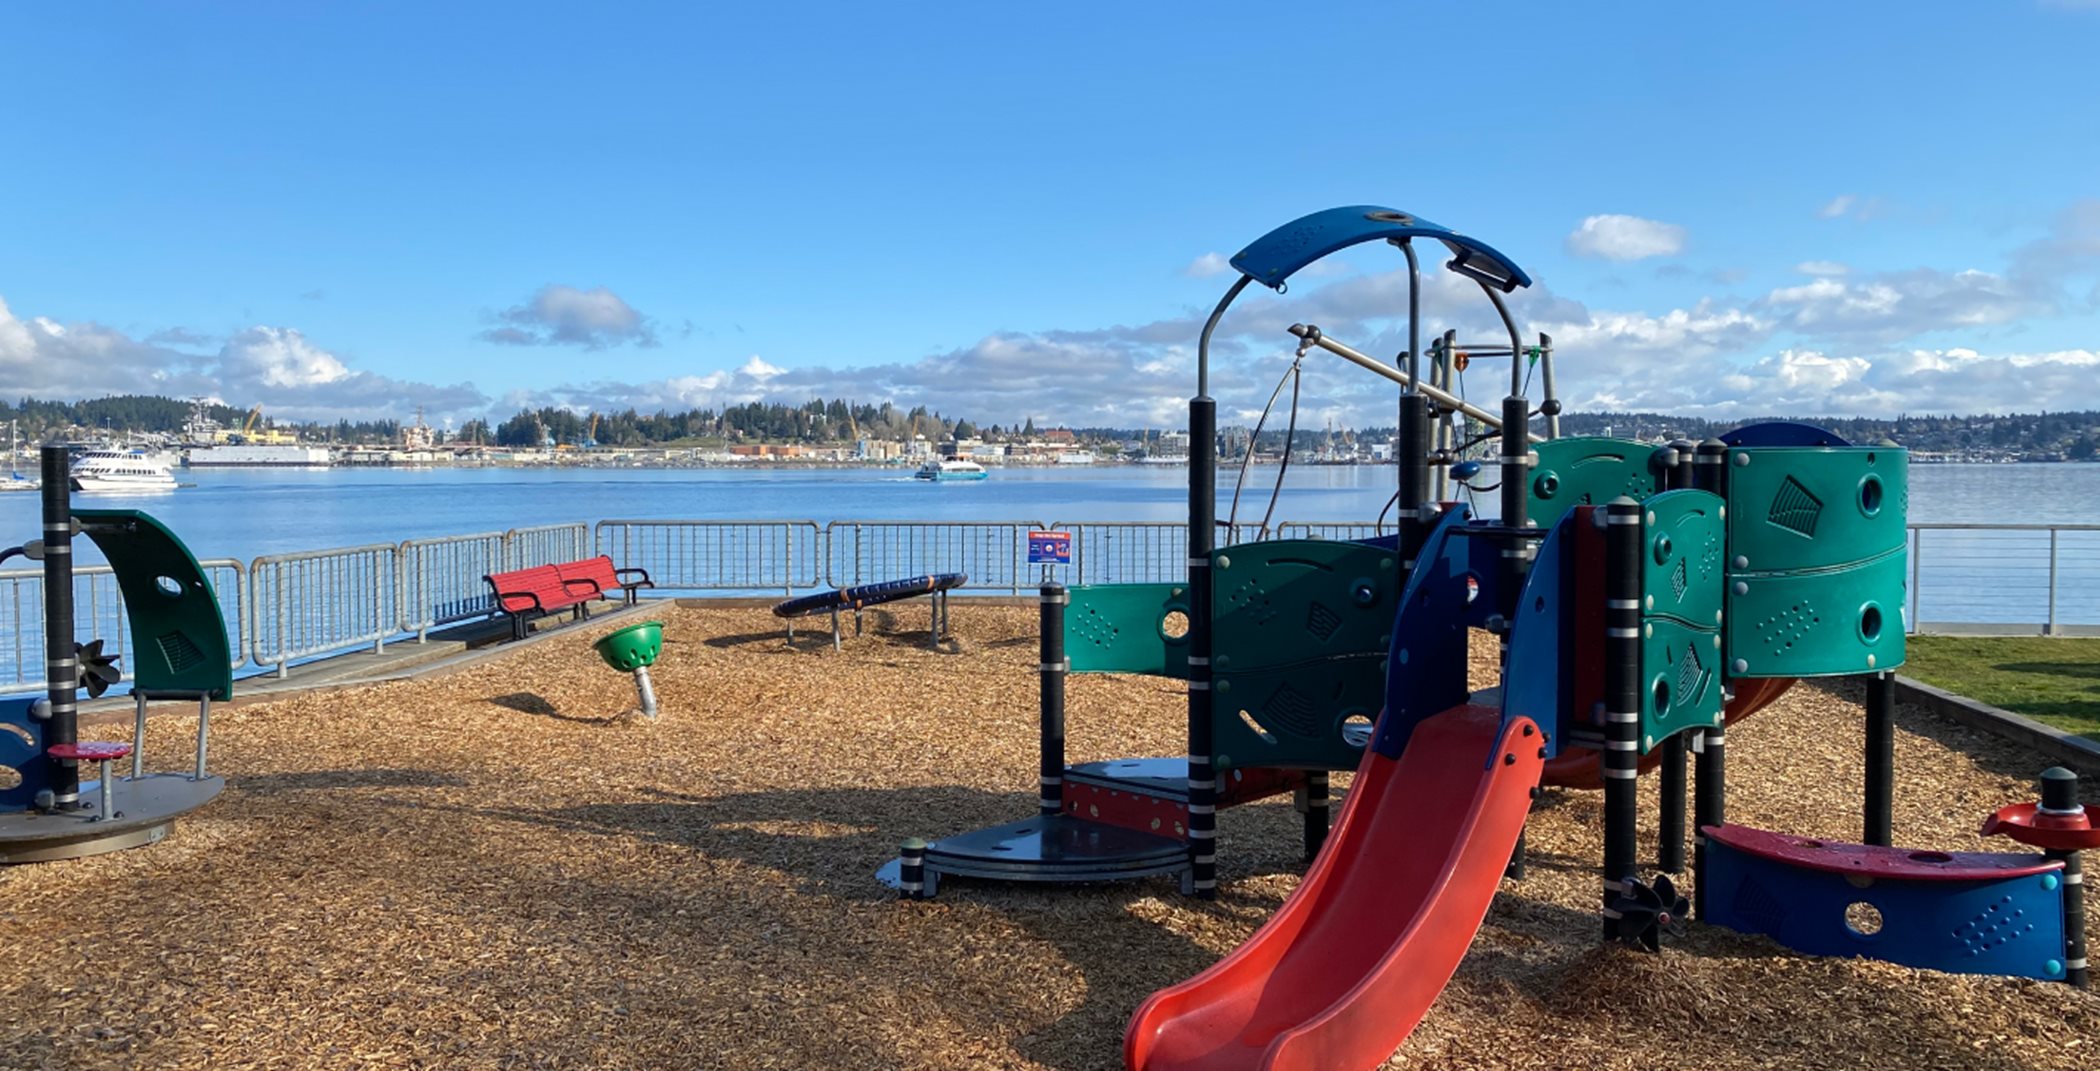 Playground overlooking the Puget Sound